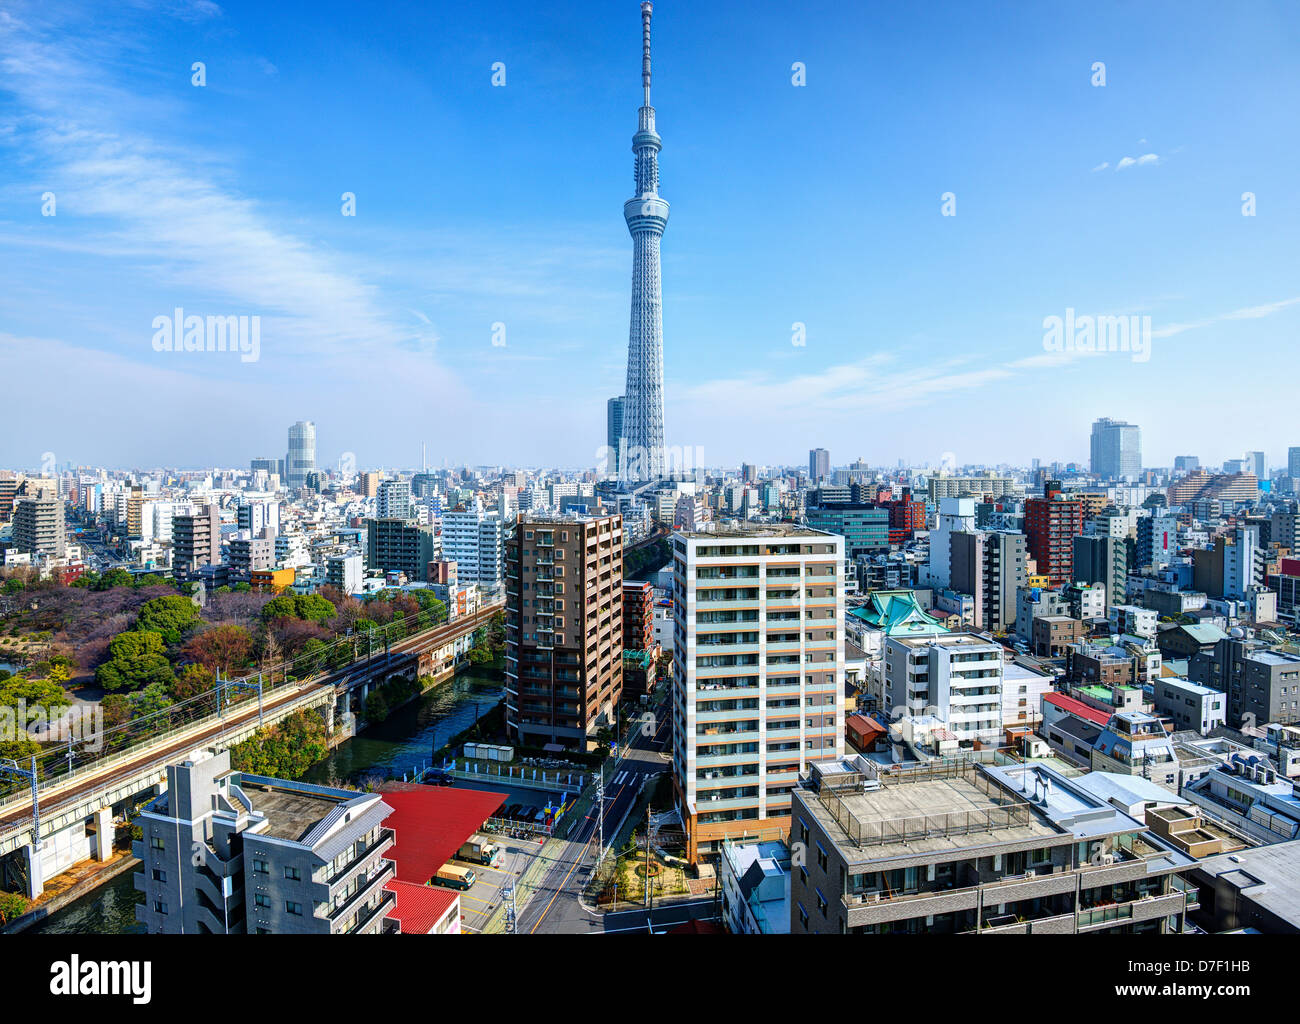 Landmark structures in Tokyo, Japan. Stock Photo